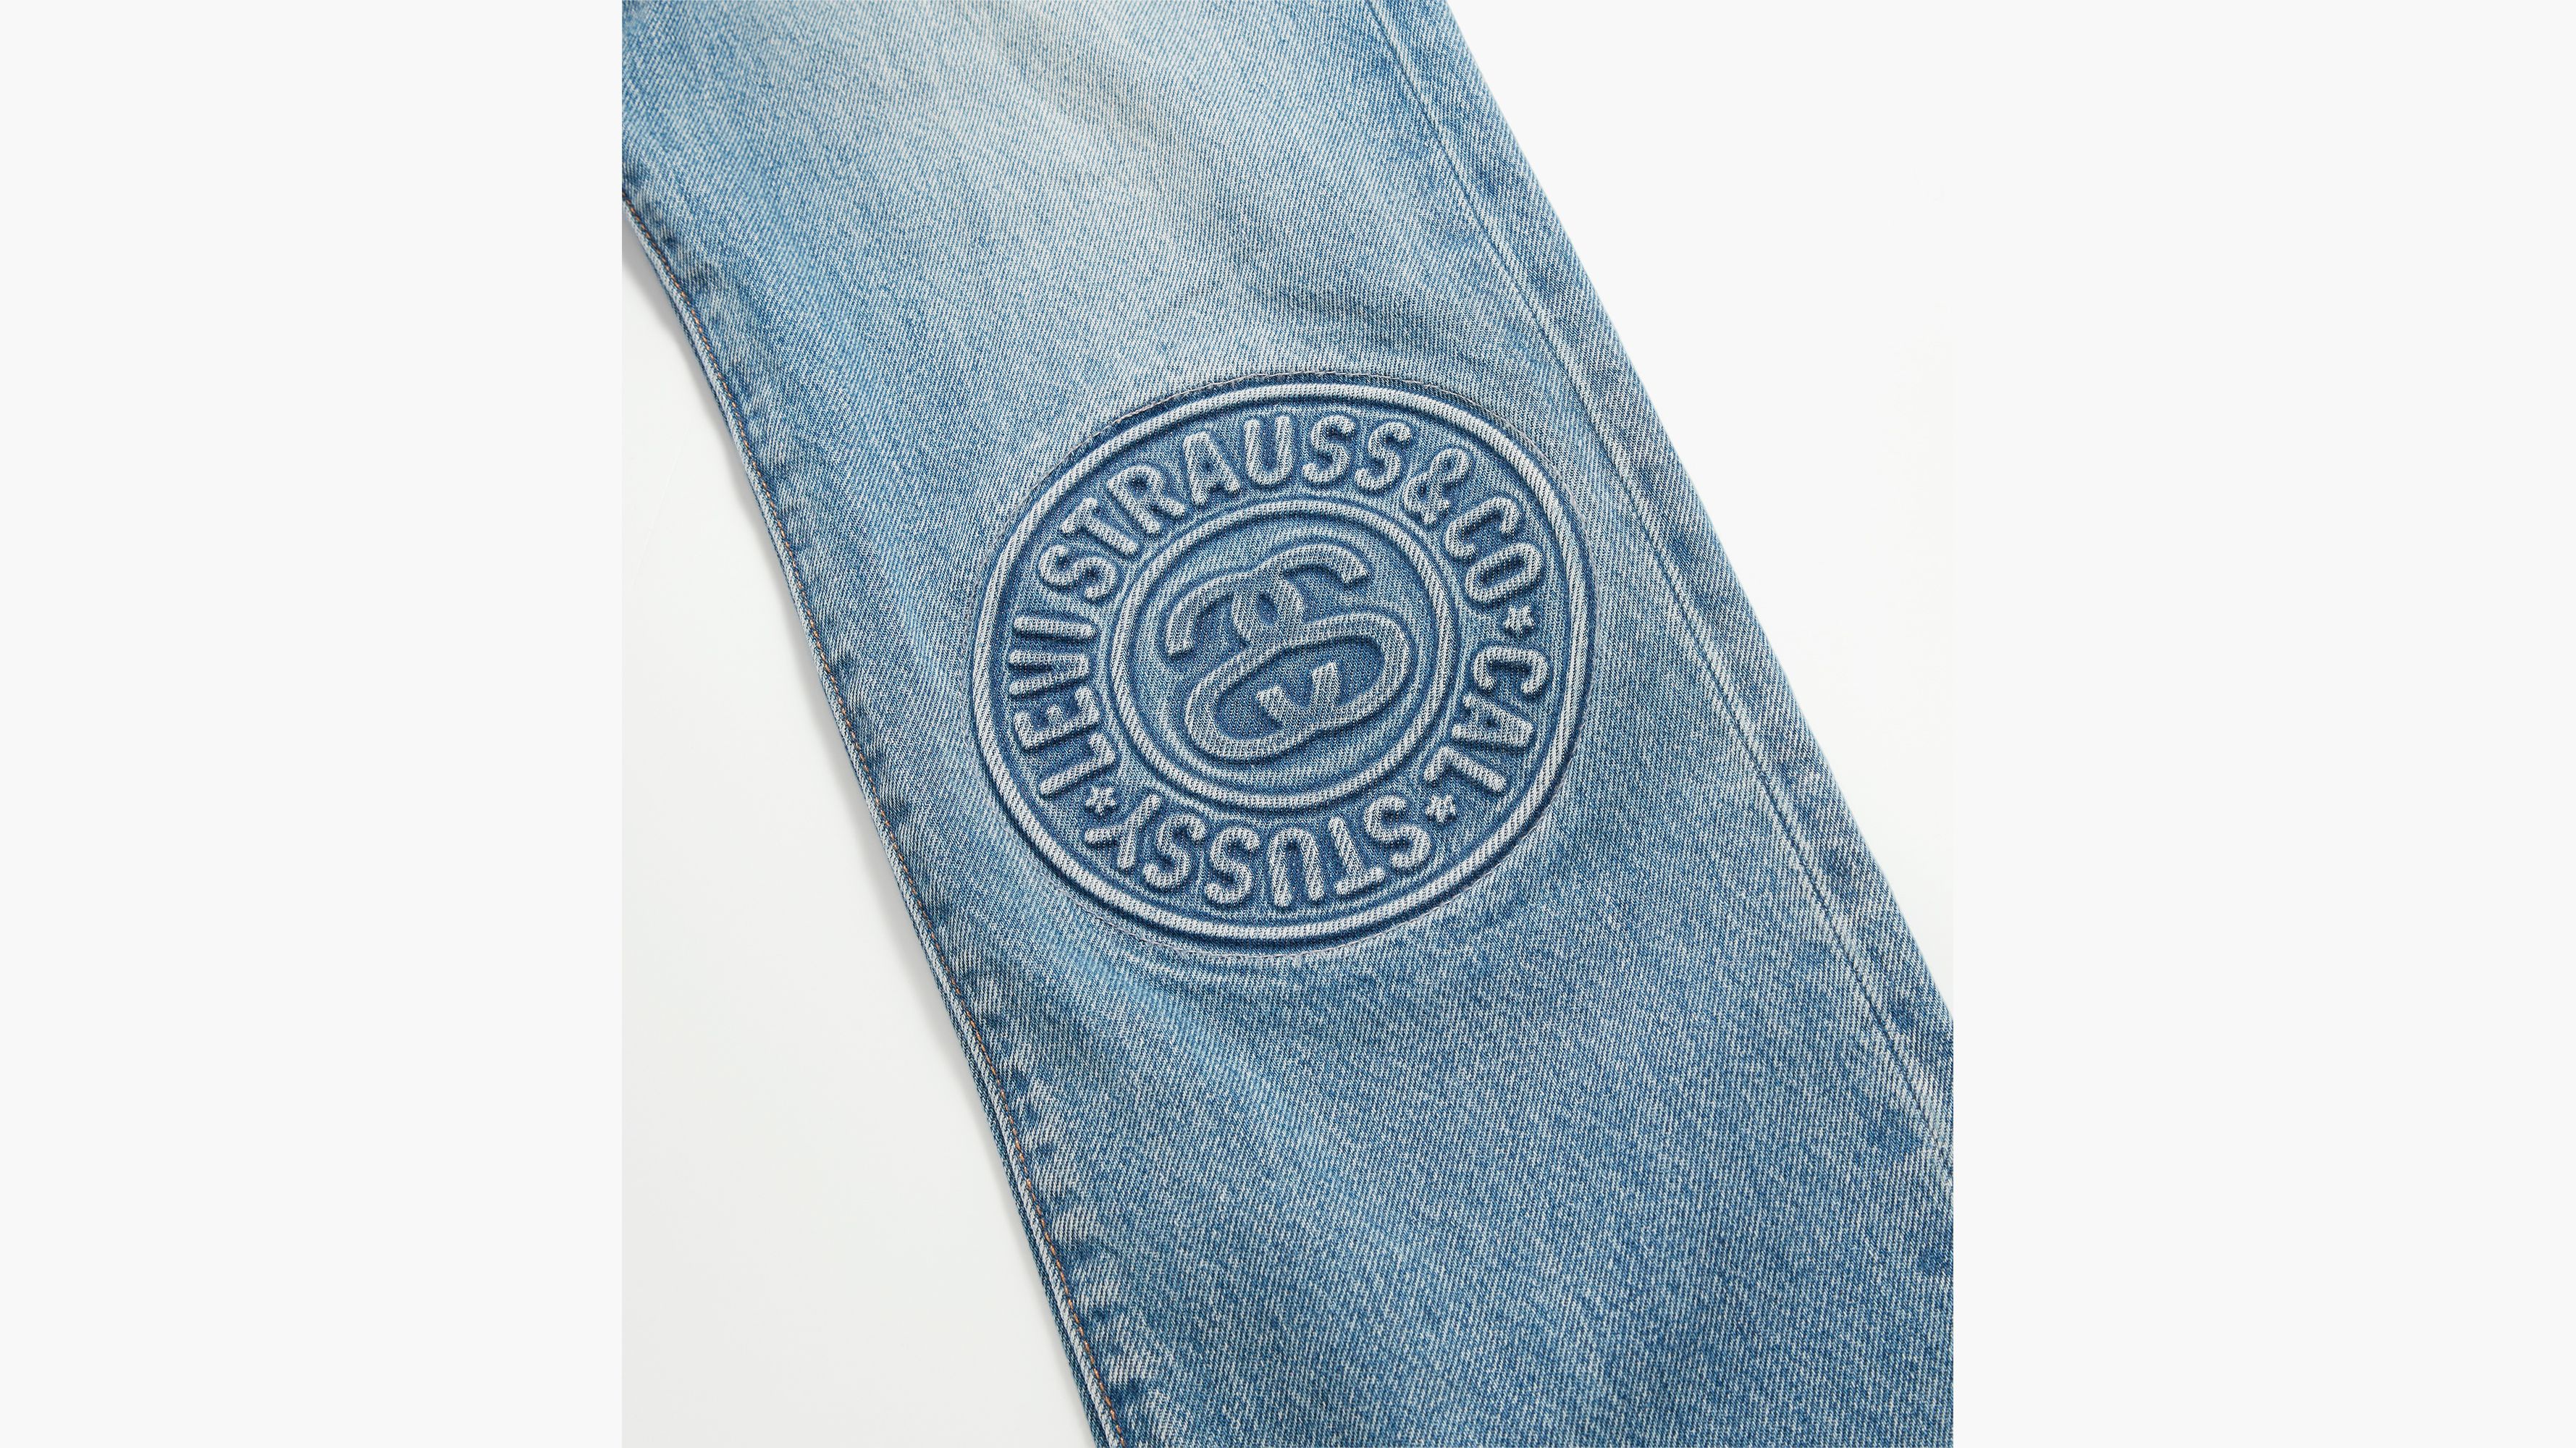 Stüssy & Levi’s® Embossed 501® Jeans